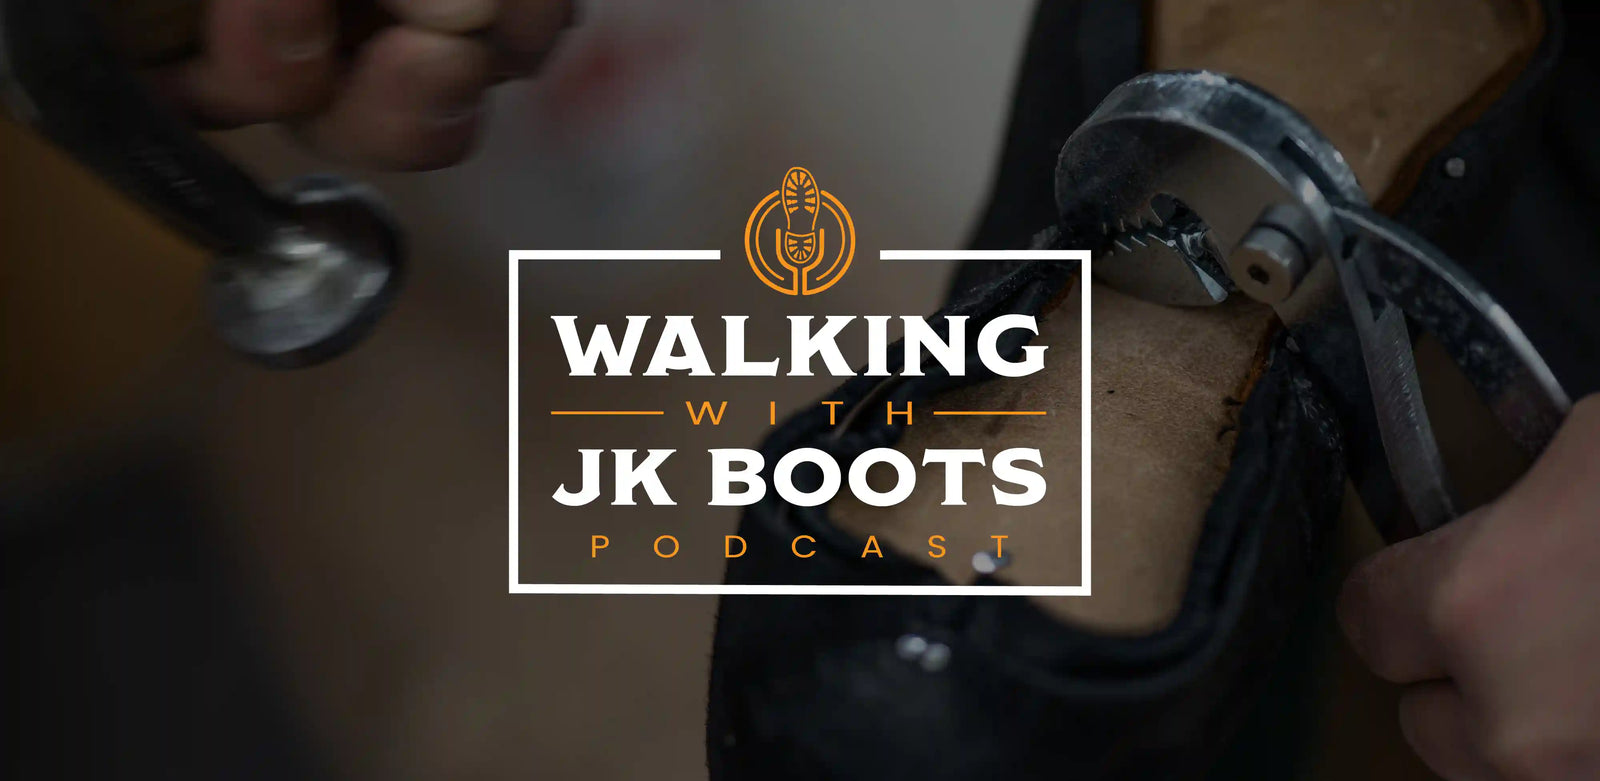 walking with jkboots podcast logo image